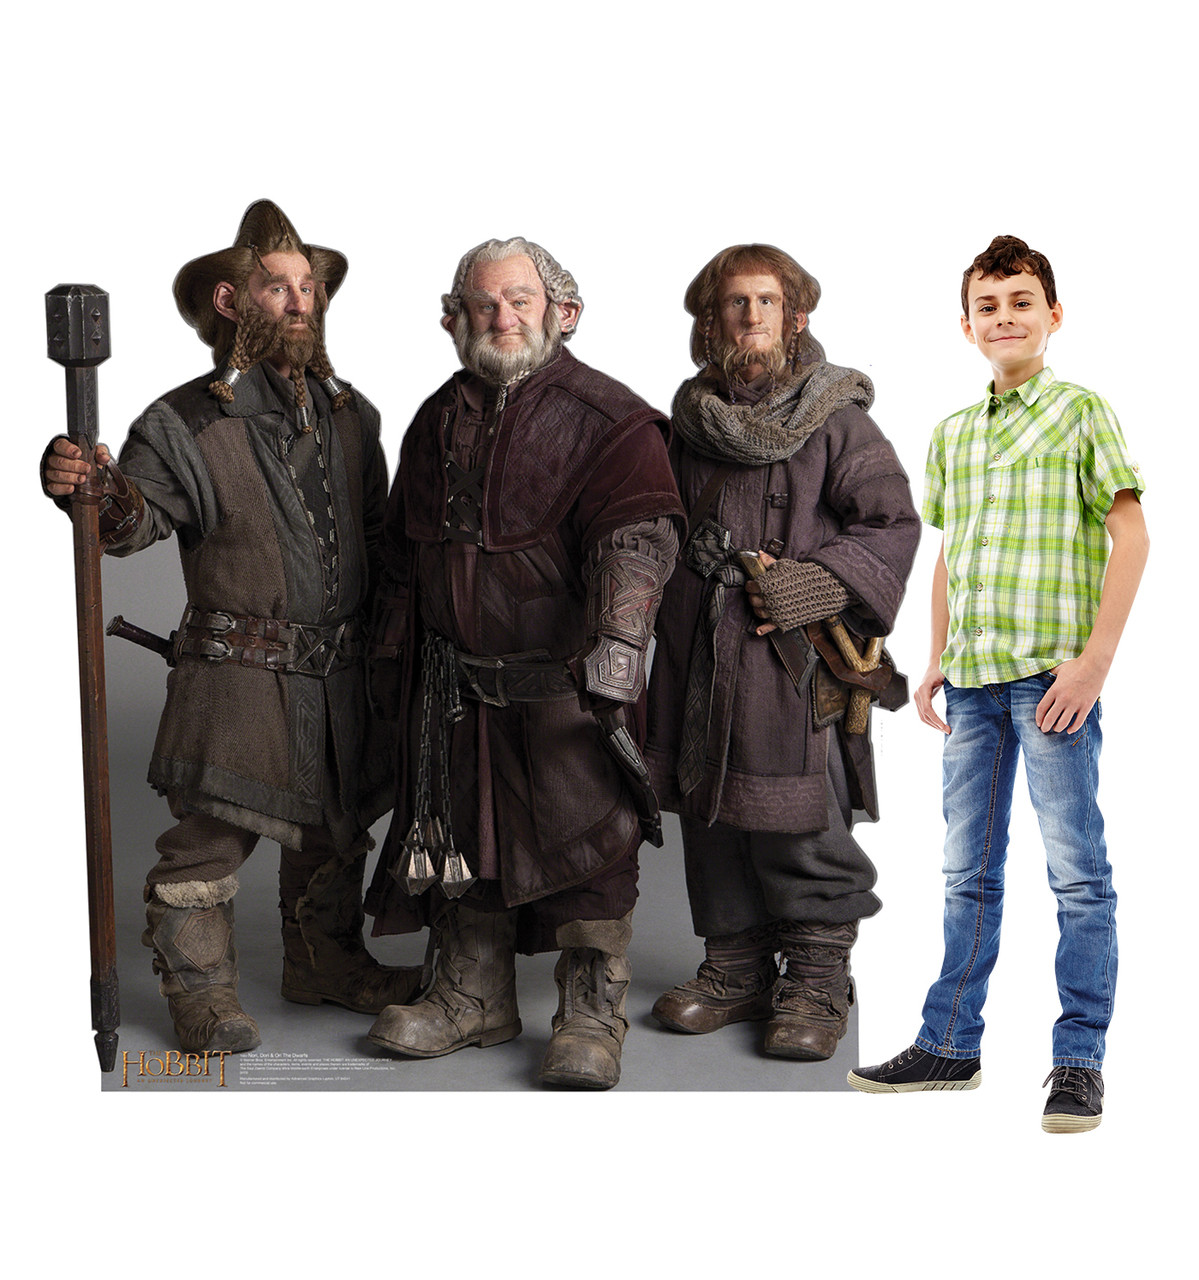 Life-size Nori, Dori, Ori The Dwarfs - The Hobbit Cardboard Standup